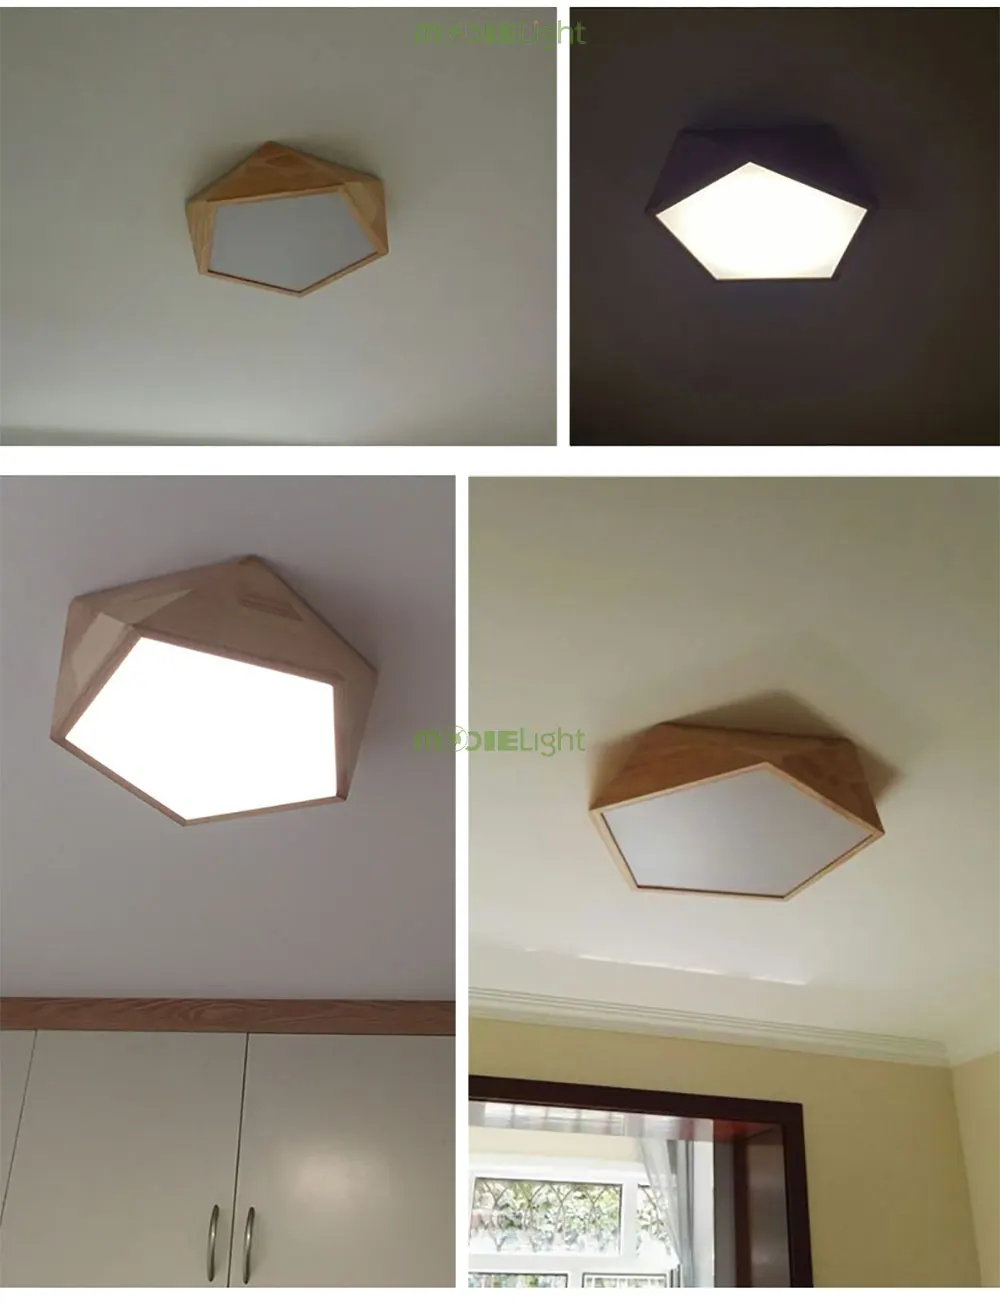 Mooielight Creative Wood Geometric LED Ceiling Lamps modern living room bedroom aisle ceiling light, Indoor Lighting Fixture